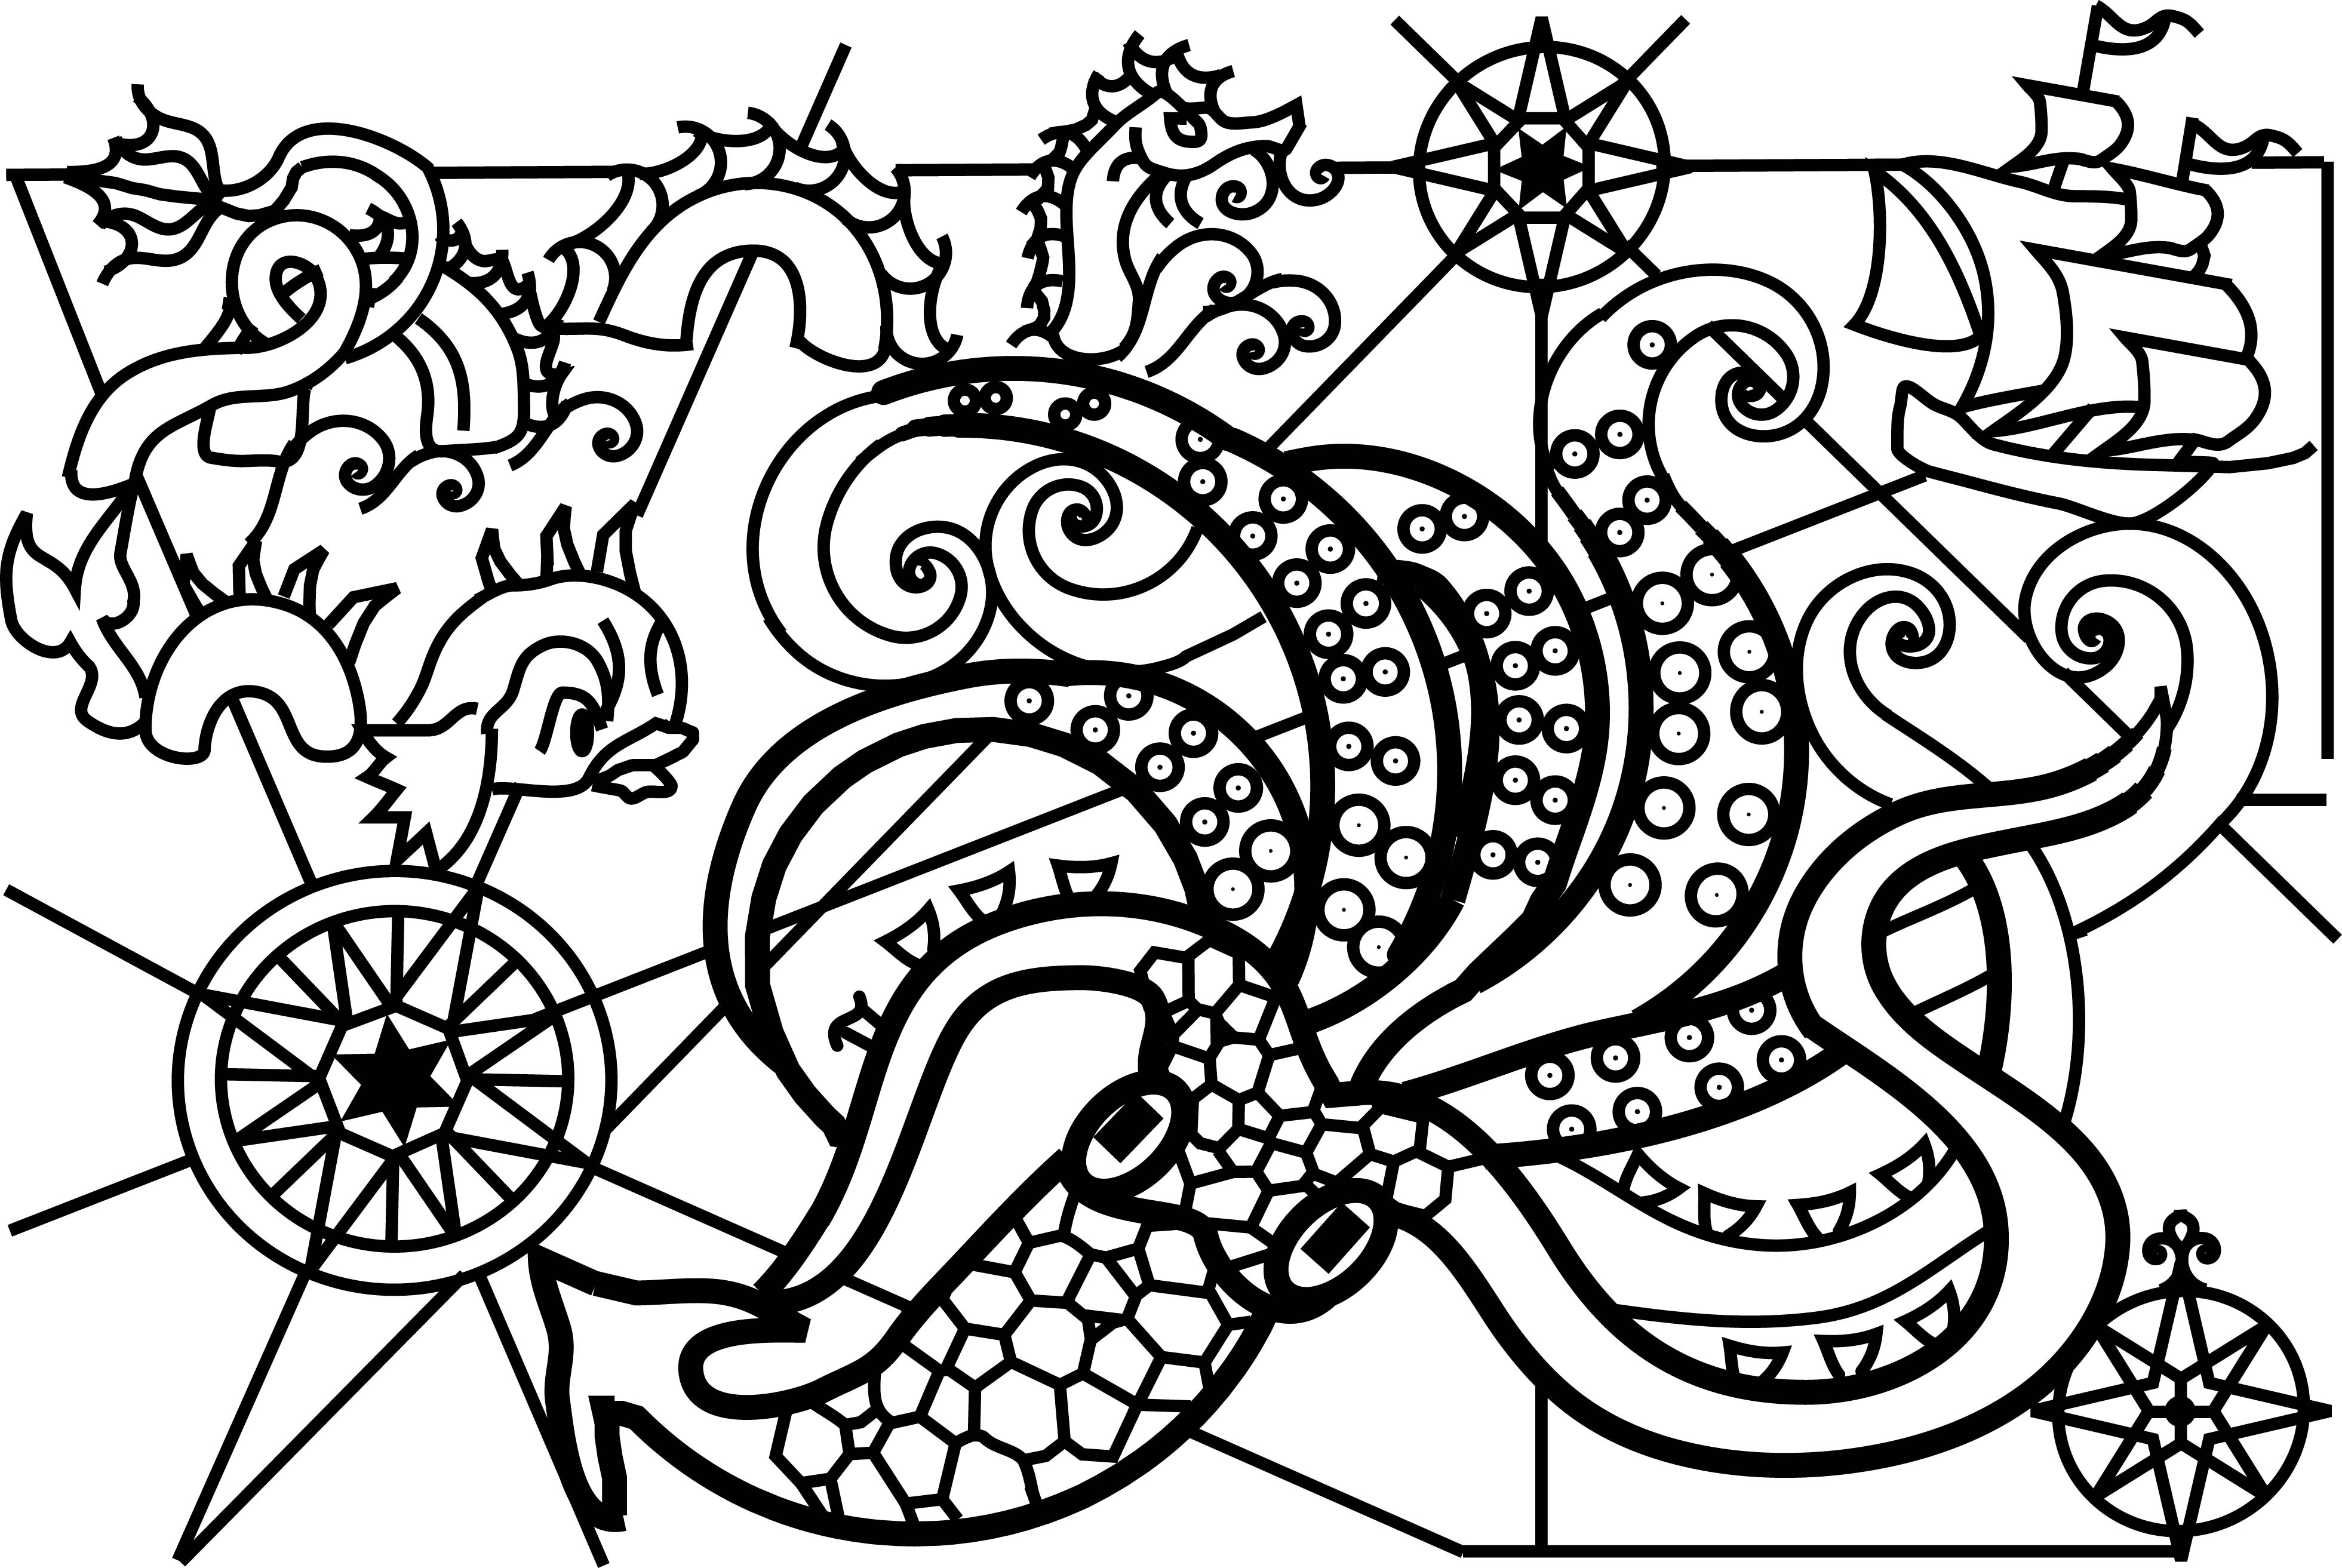 Kraken svg #1, Download drawings